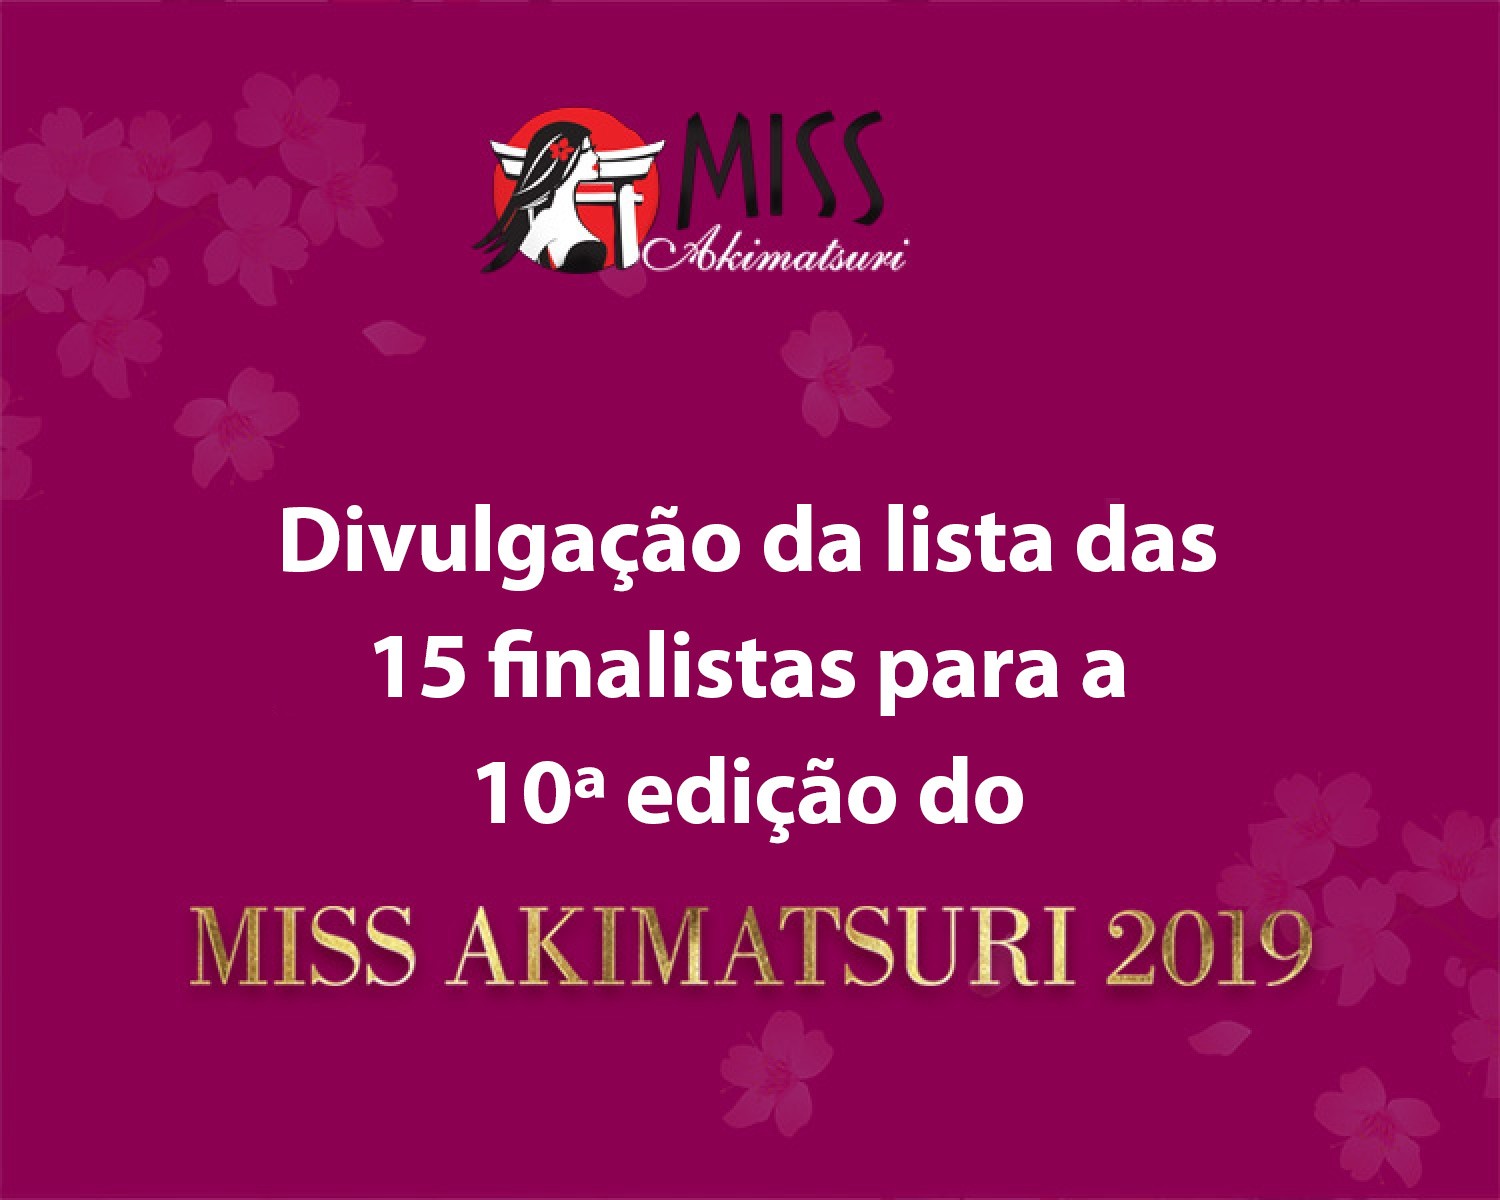 Img: Conheça as 15 finalistas do Concurso Akimatsuri 2019